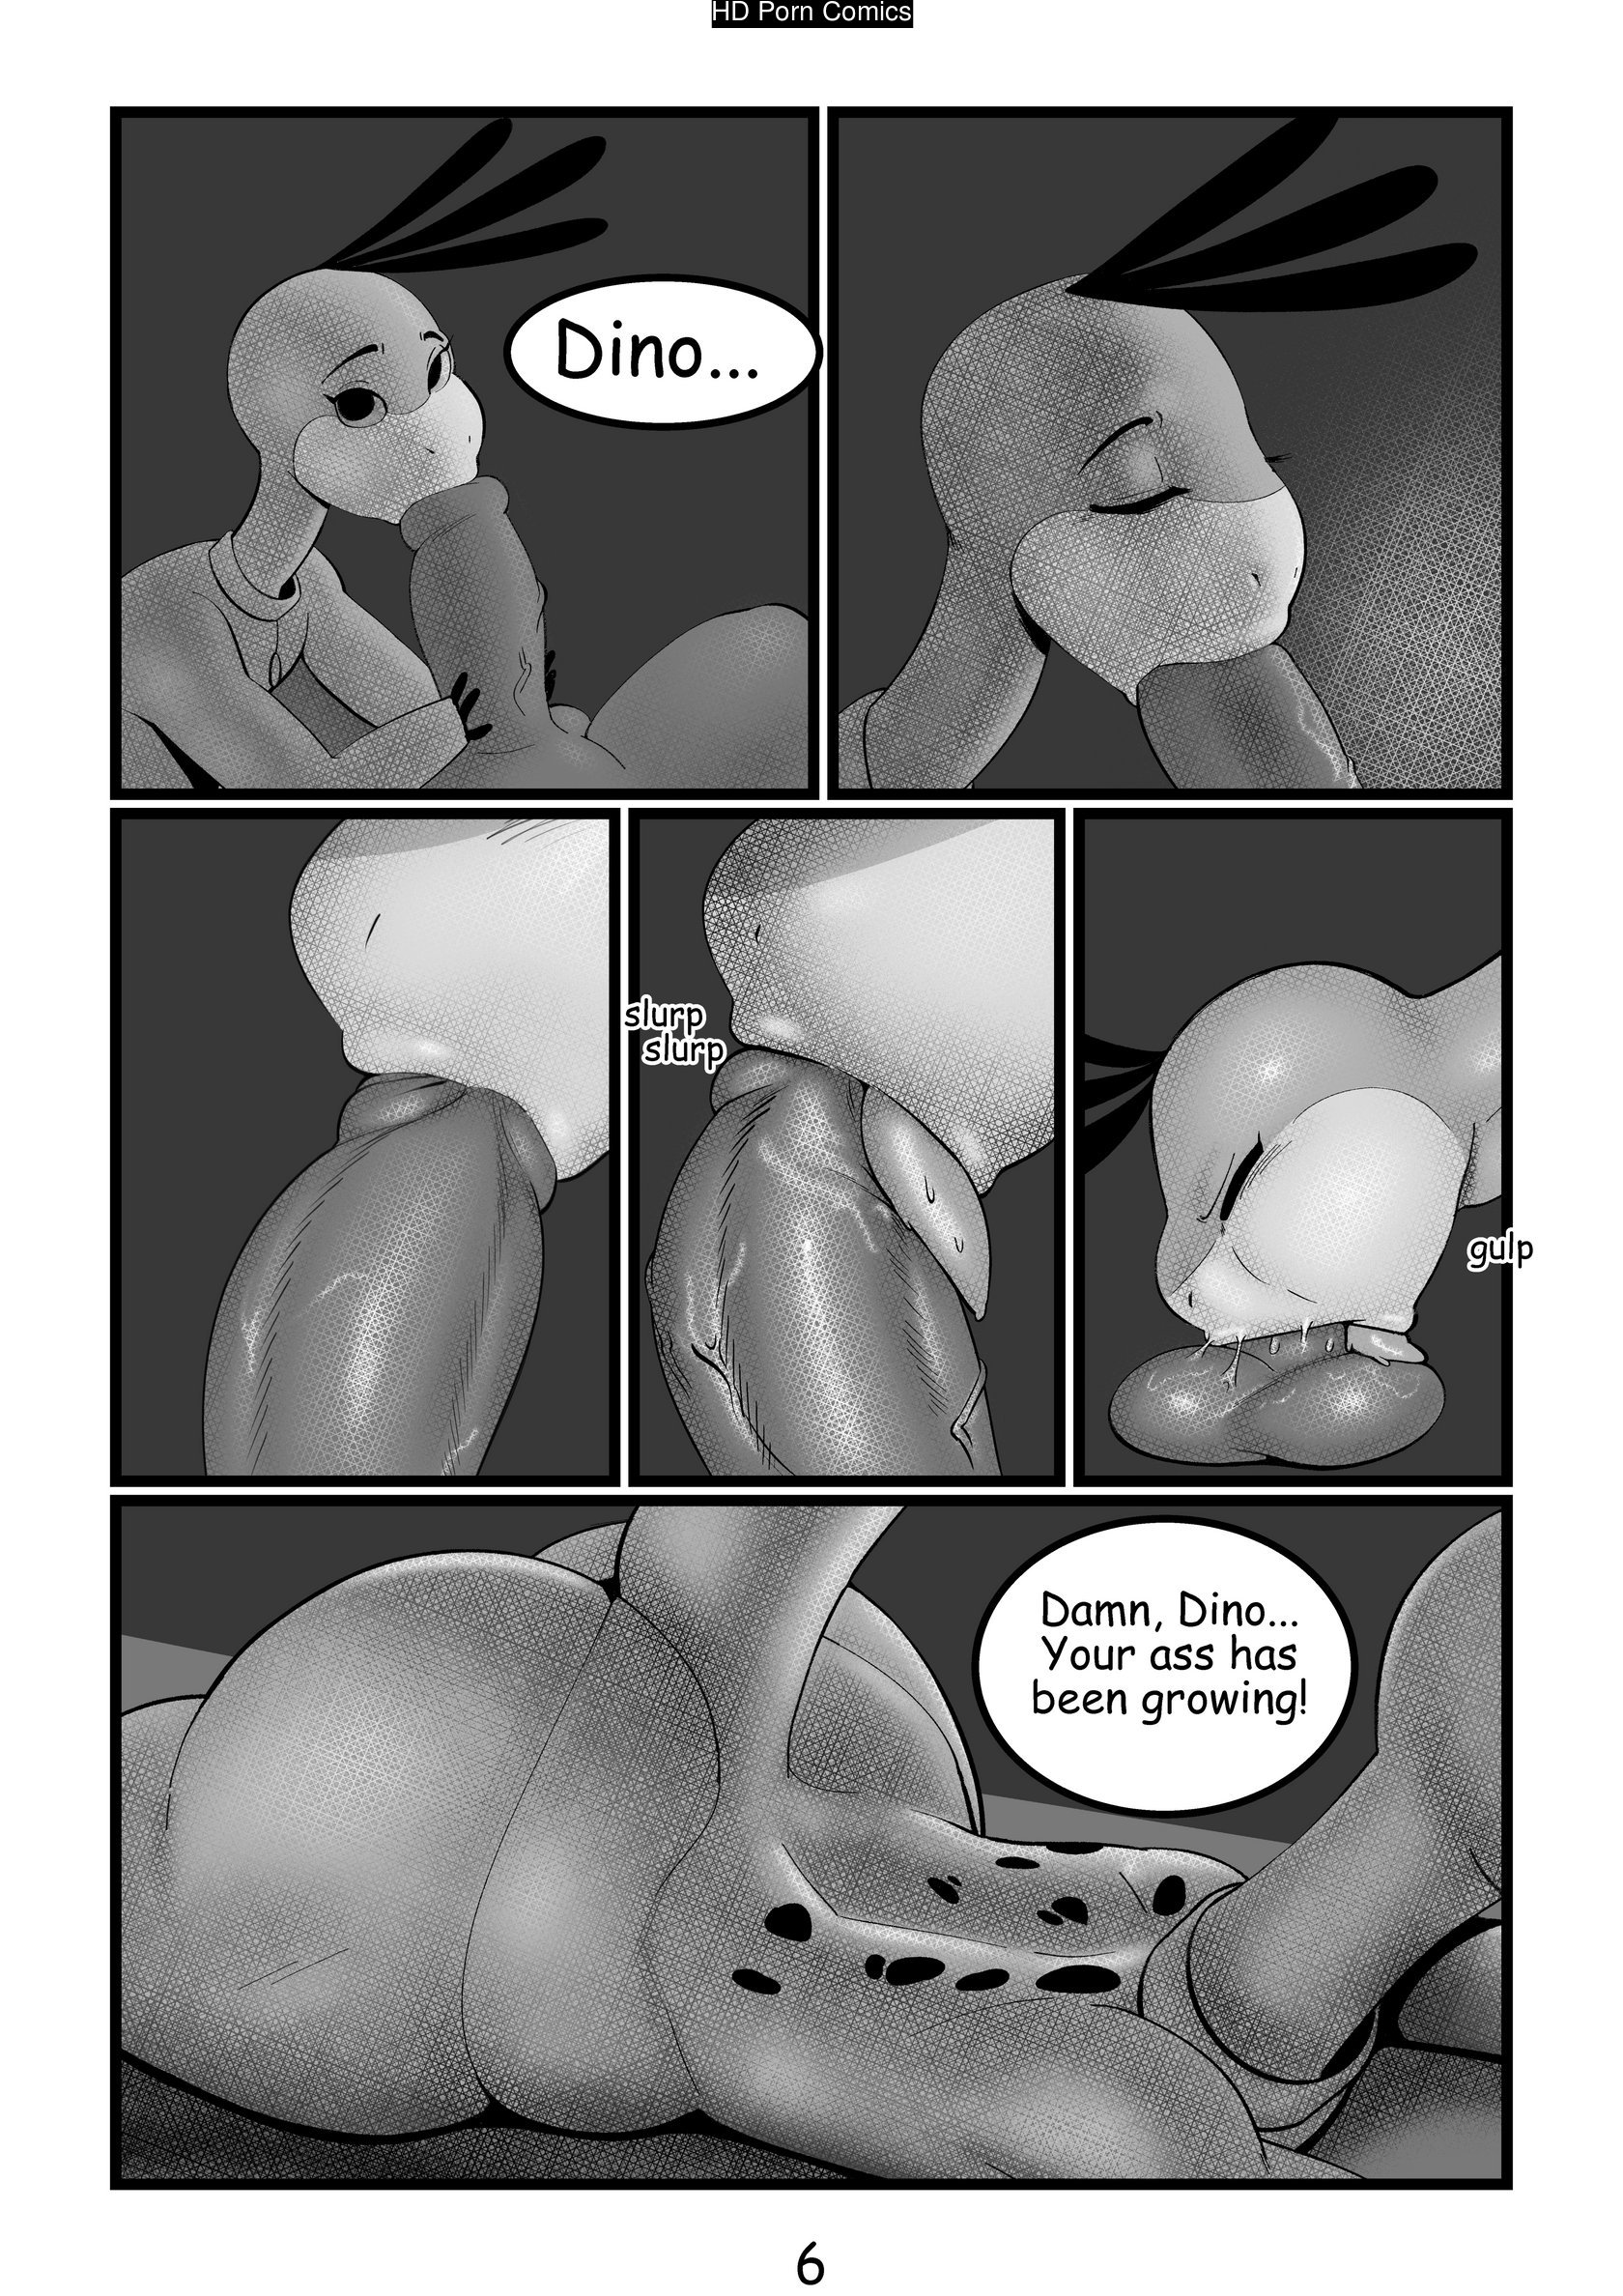 Furry Dinosaur Porn Slut - Dino comic porn - HD Porn Comics